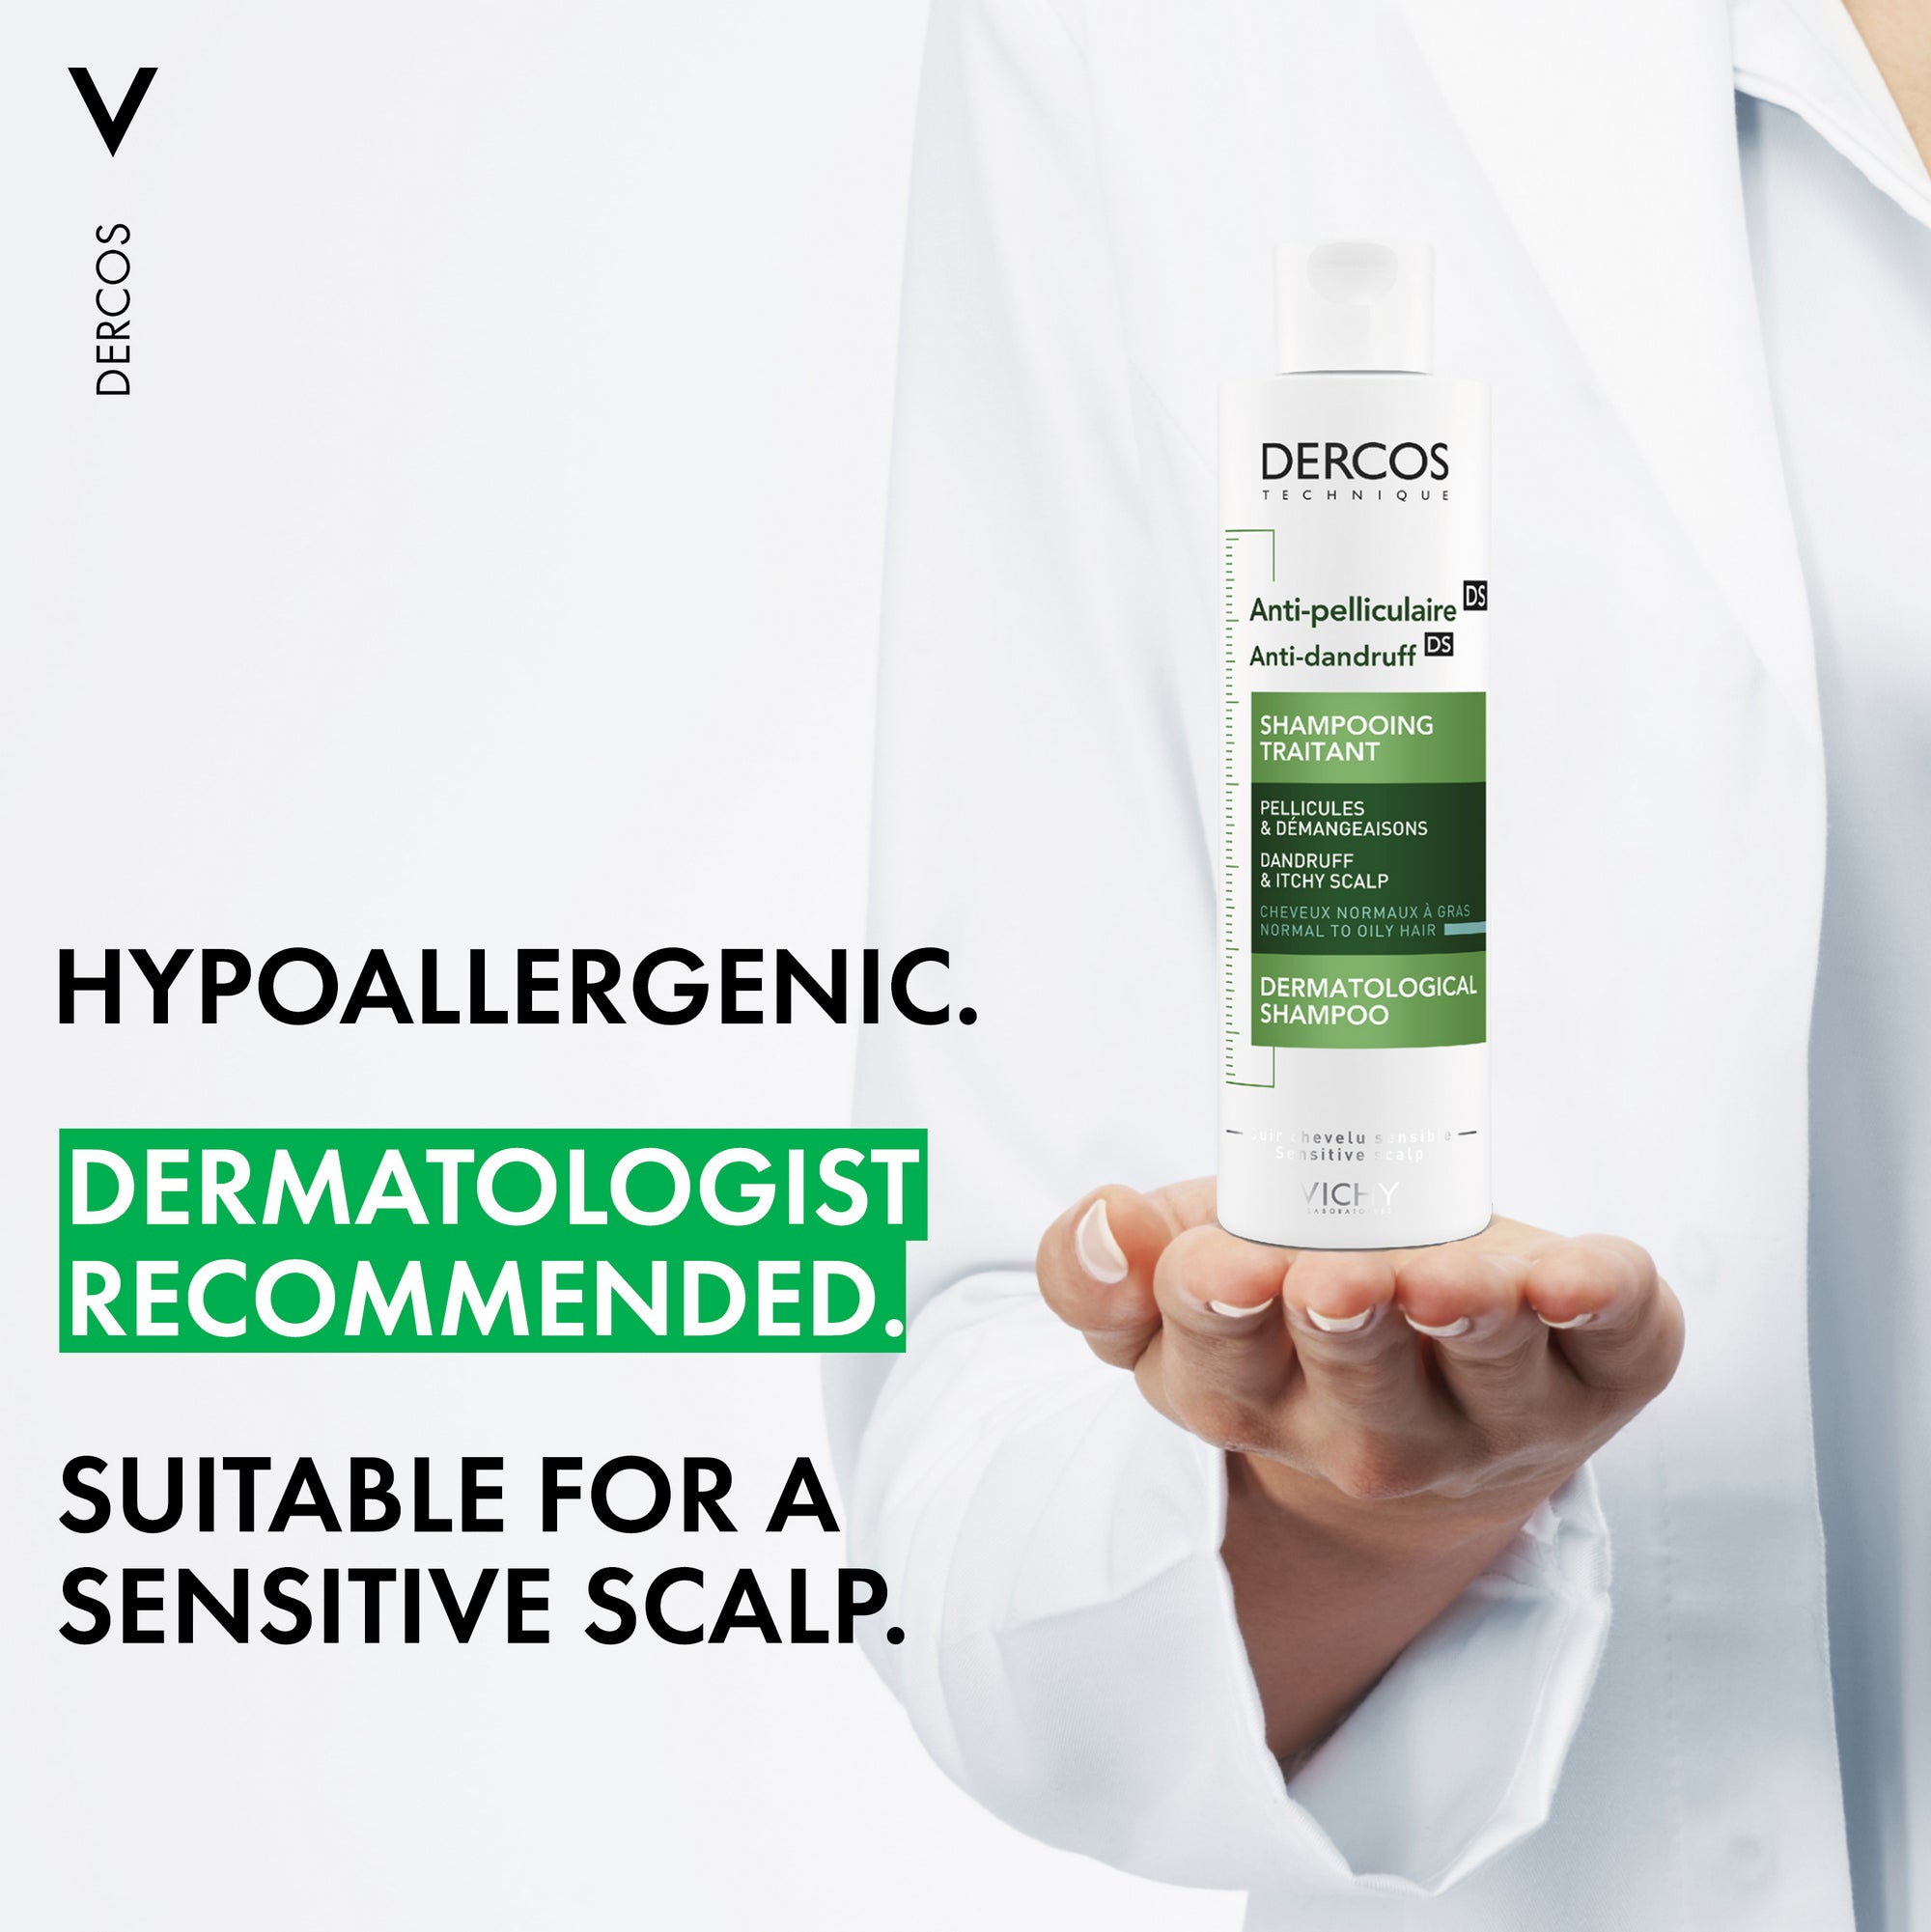 Vichy Dercos Anti-Dandruff - Normal to Oily Hair Shampoo Medical